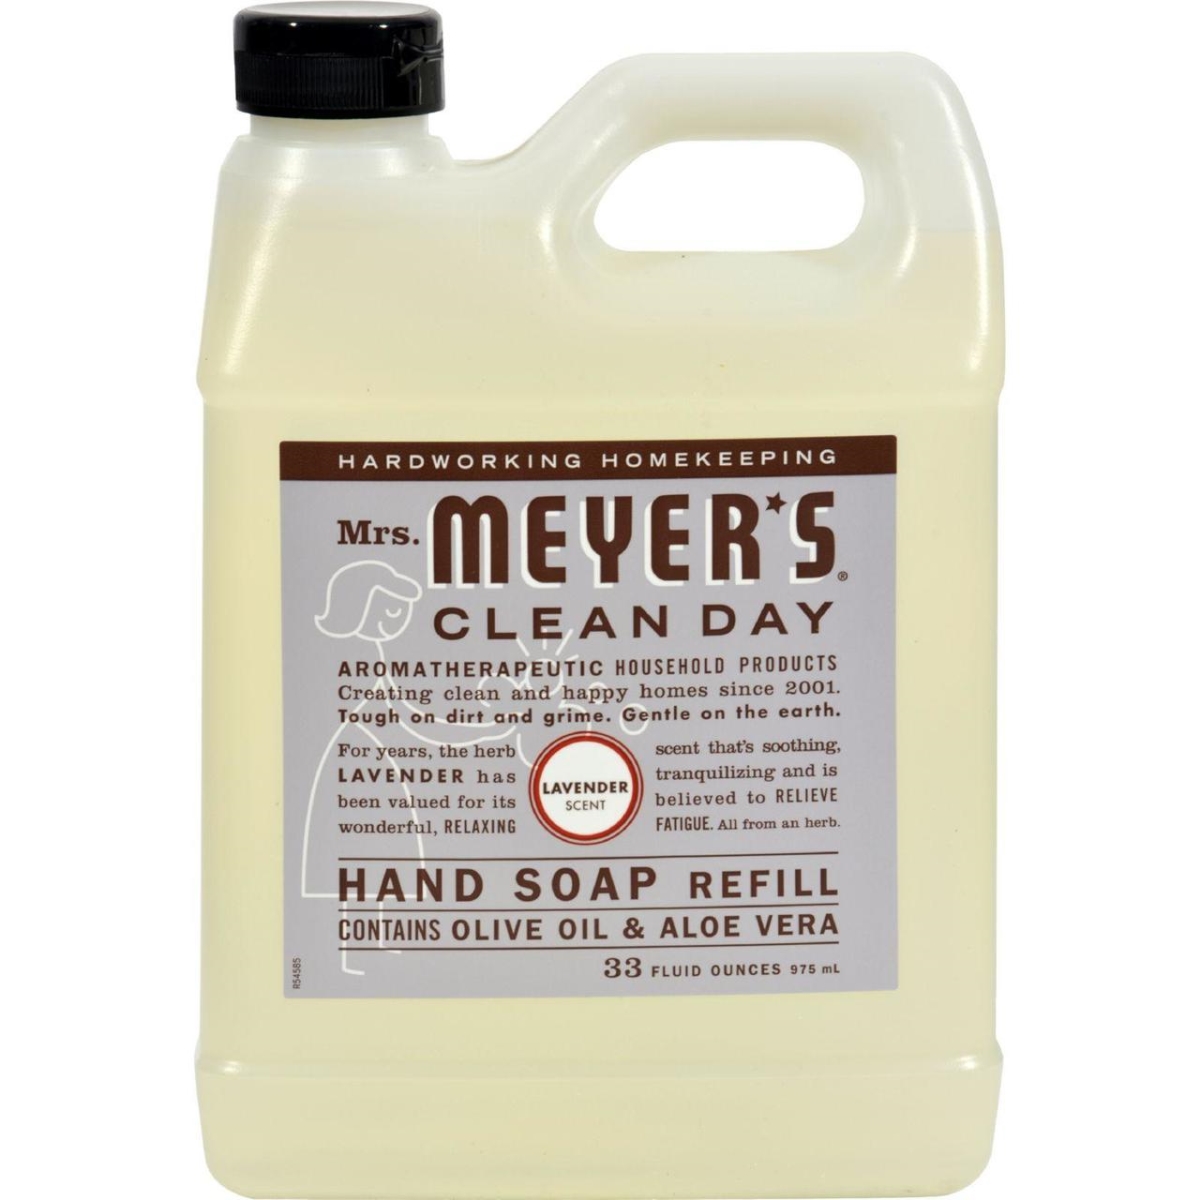 Hg1205368 33 Fl Oz Liquid Hand Soap Refill, Lavender - Case Of 6